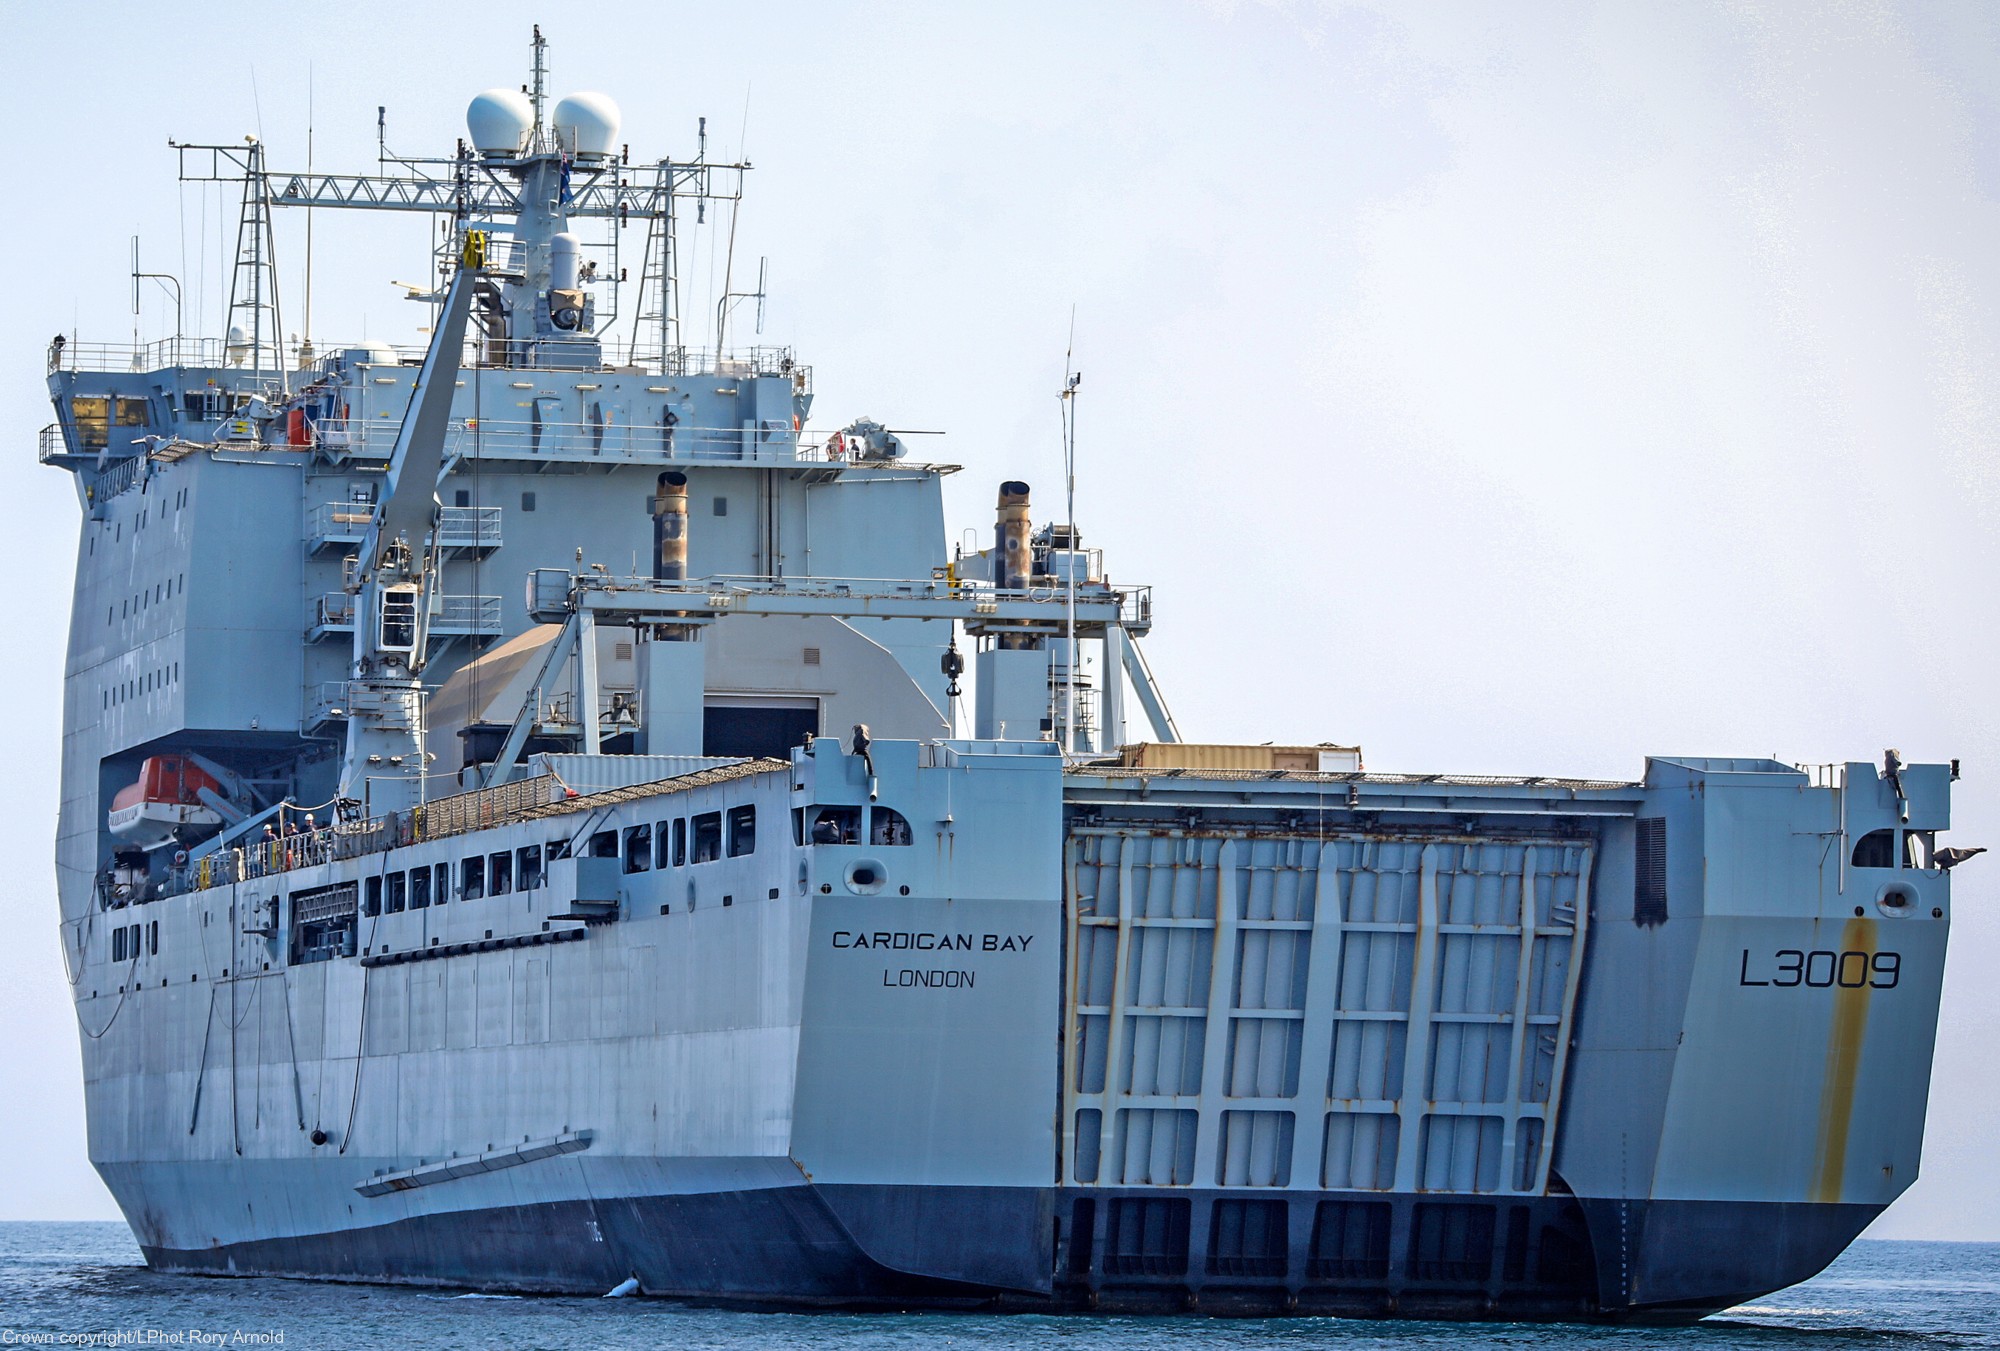 l-3009 rfa cardigan bay dock landing ship lsd royal fleet auxilary navy 21